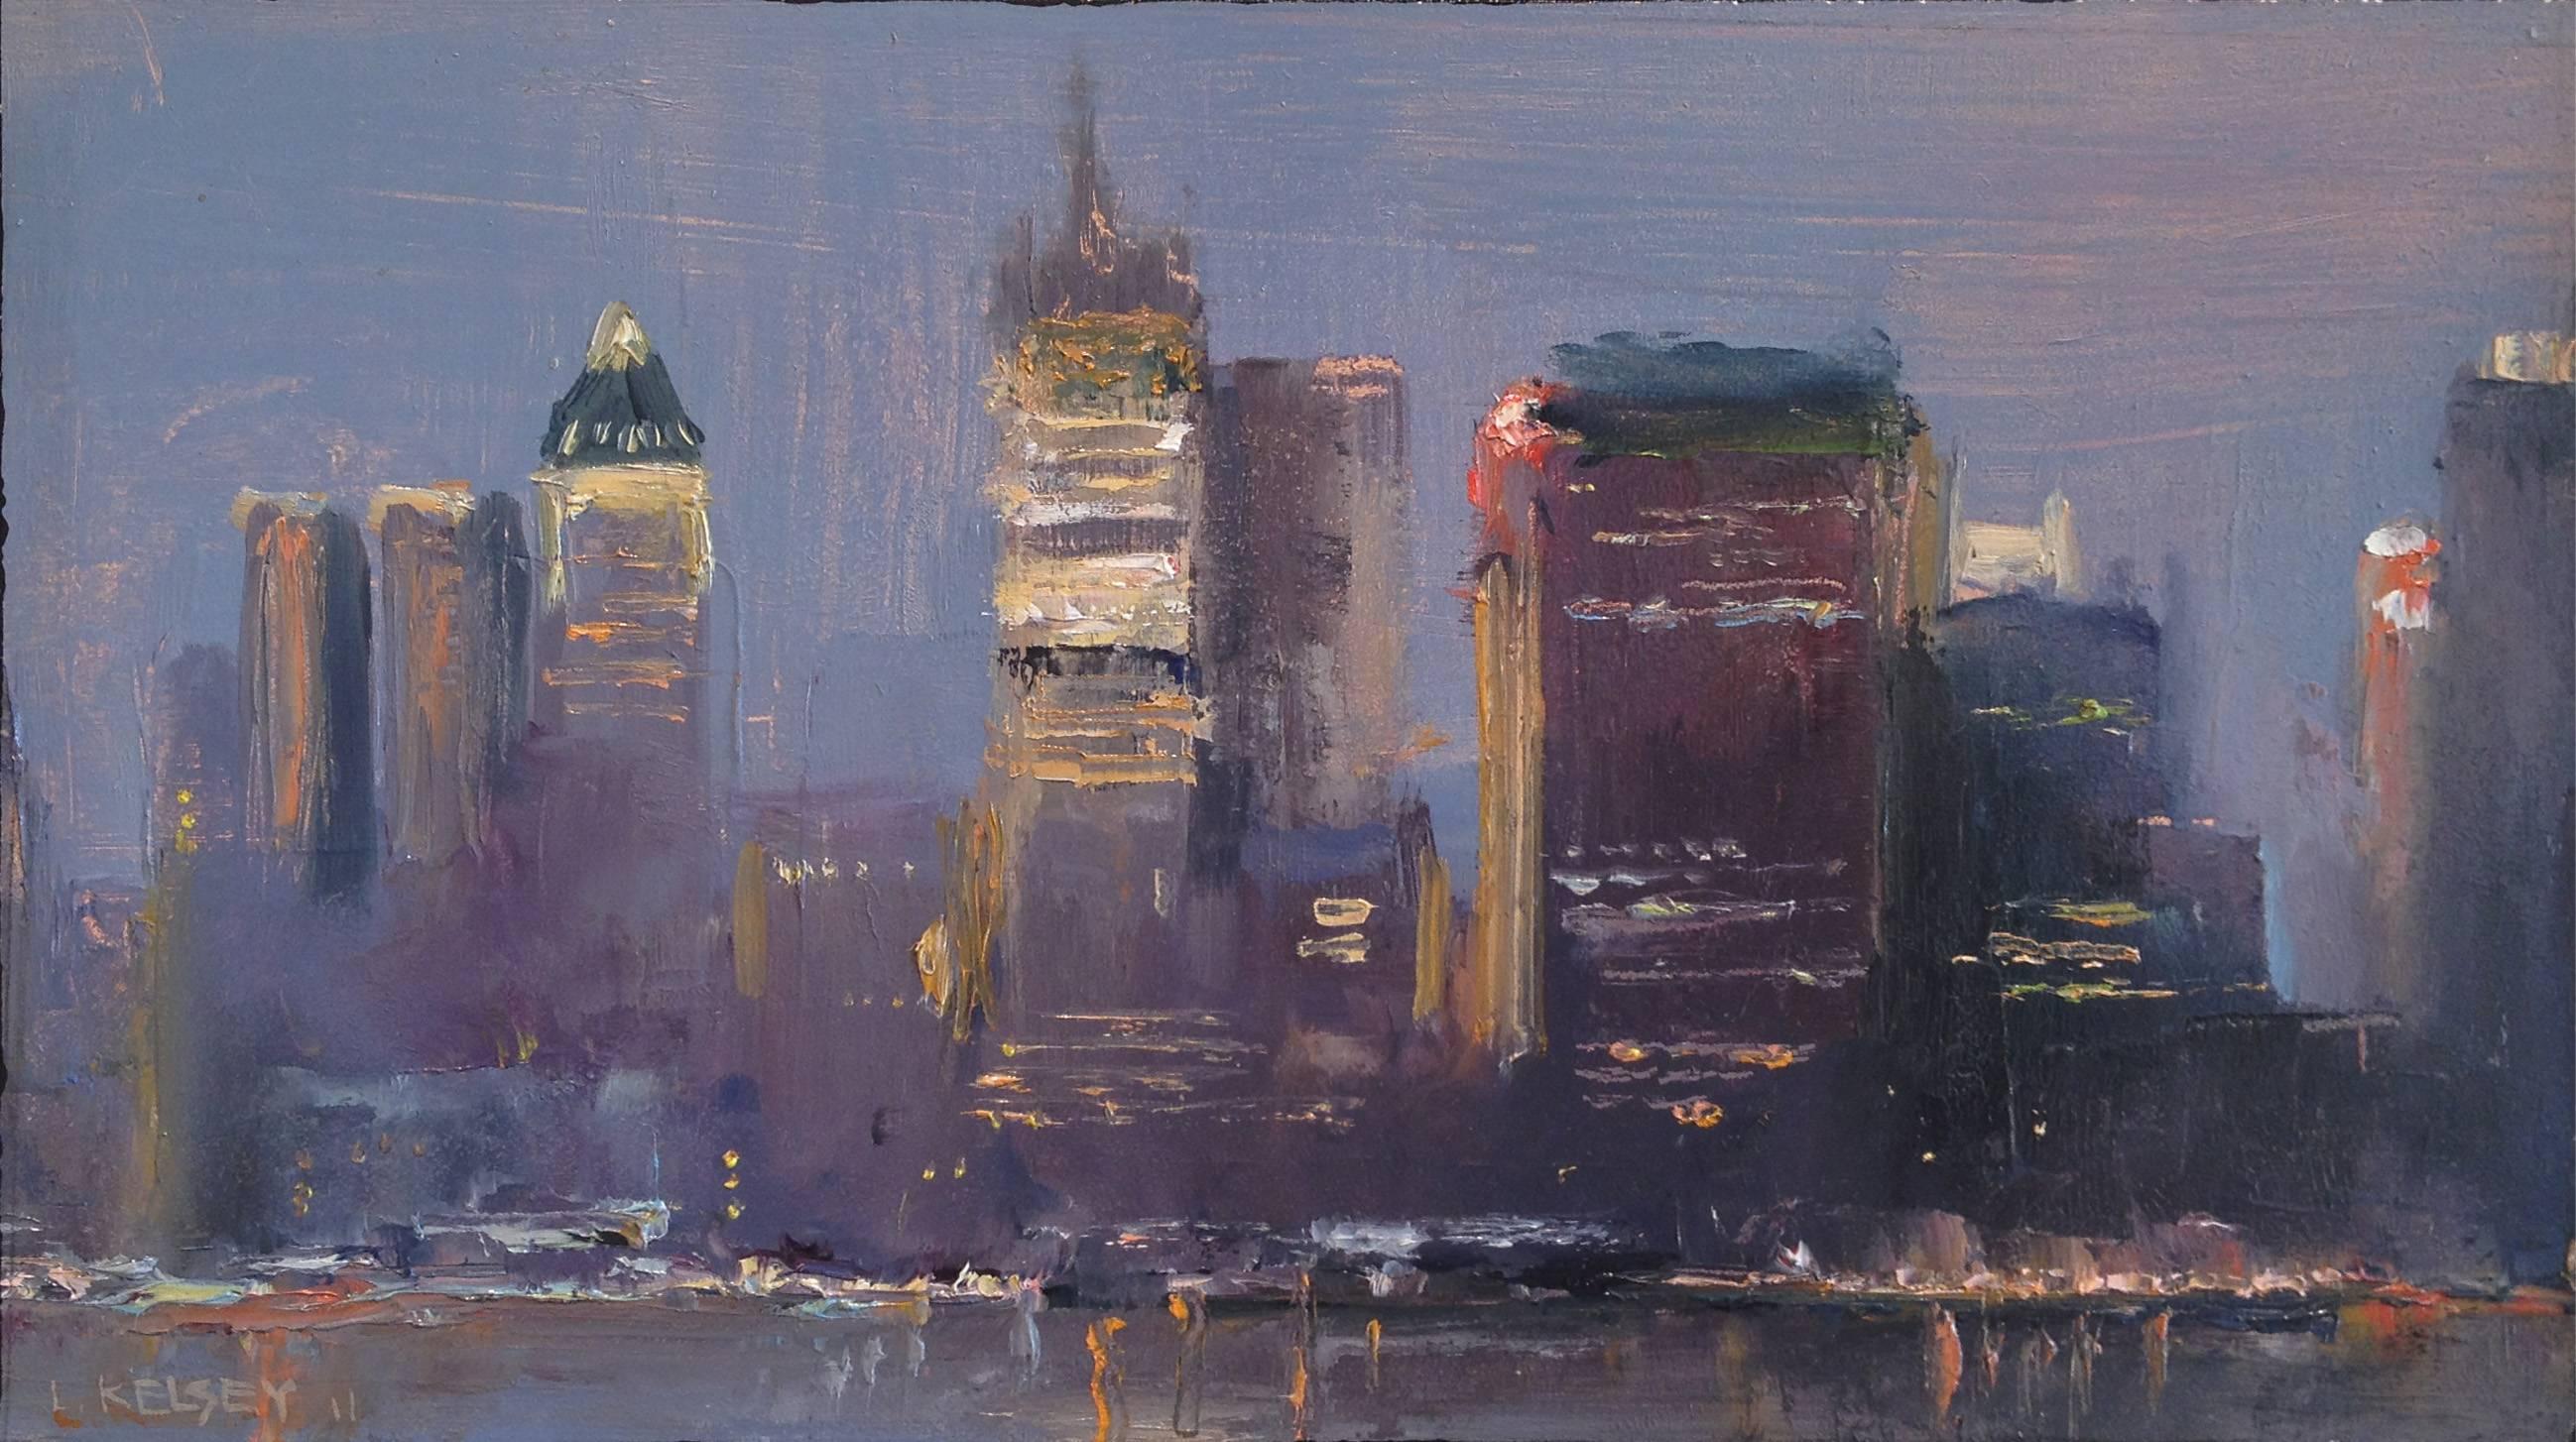 Lawrence Kelsey Landscape Painting - New York Waterfront & Skyline